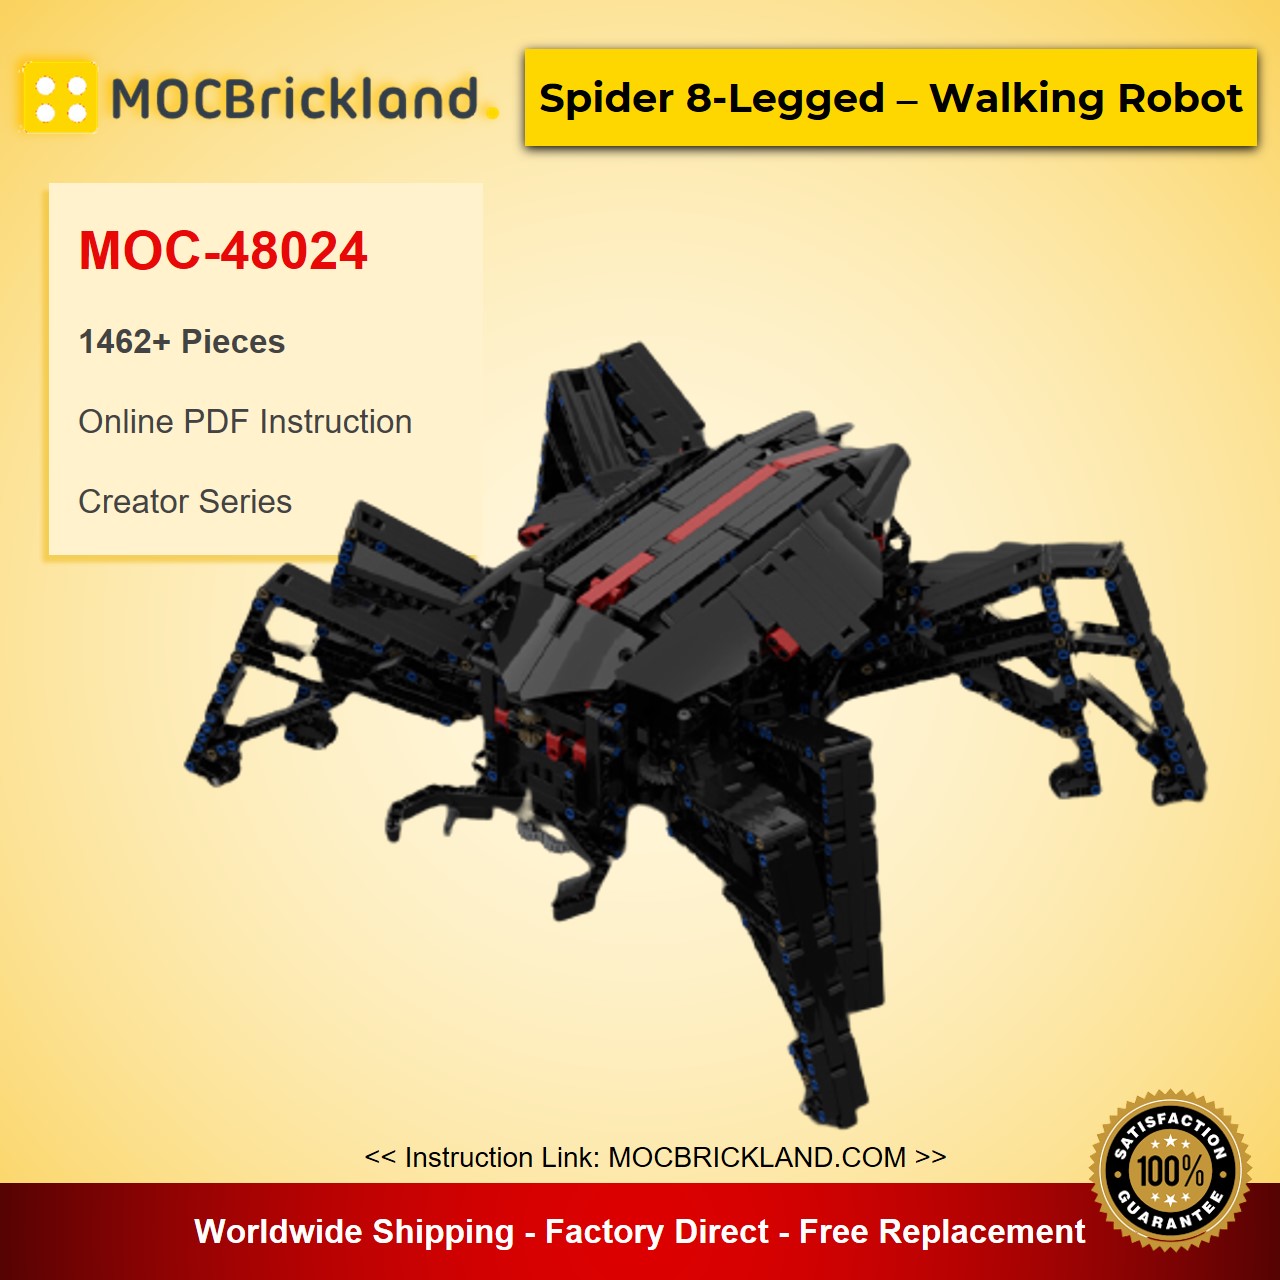 creator moc 48024 spider 8 legged walking robot by technicrocks mocbrickland 5674